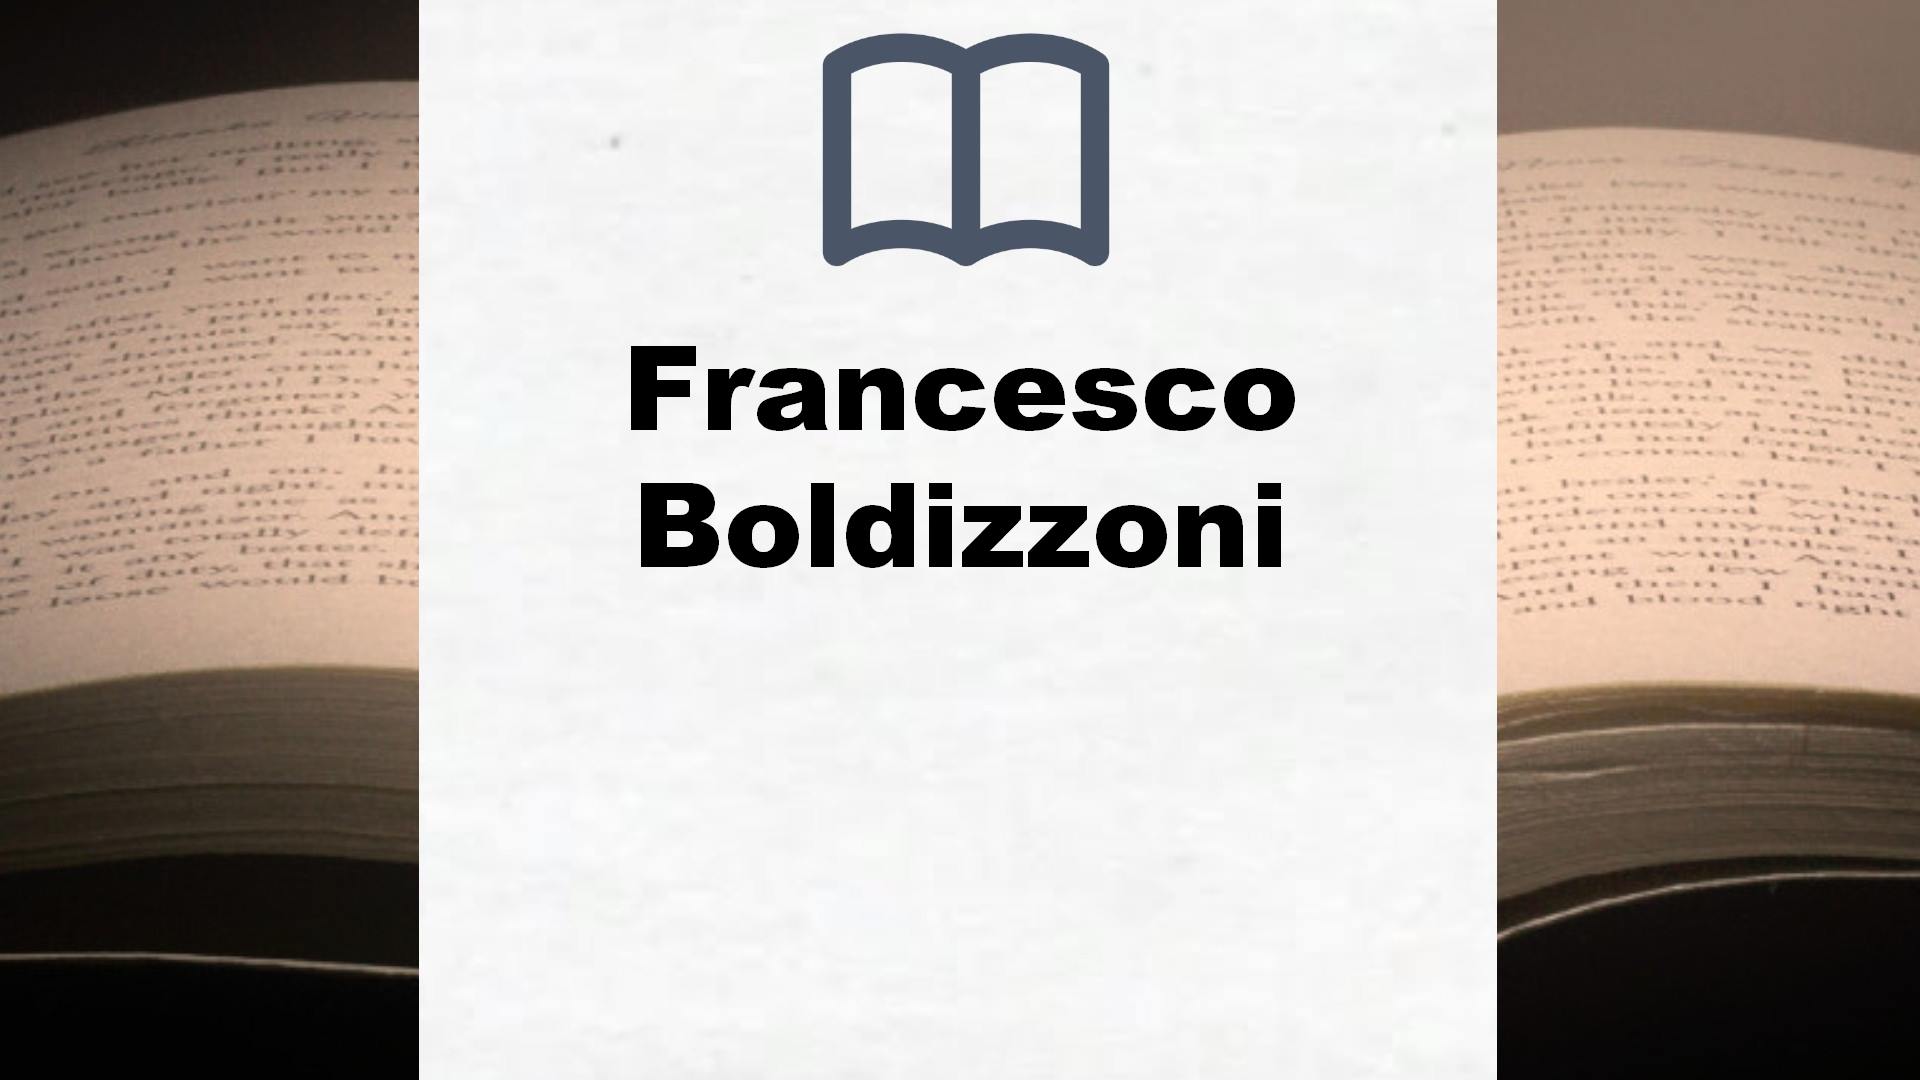 Libros Francesco Boldizzoni